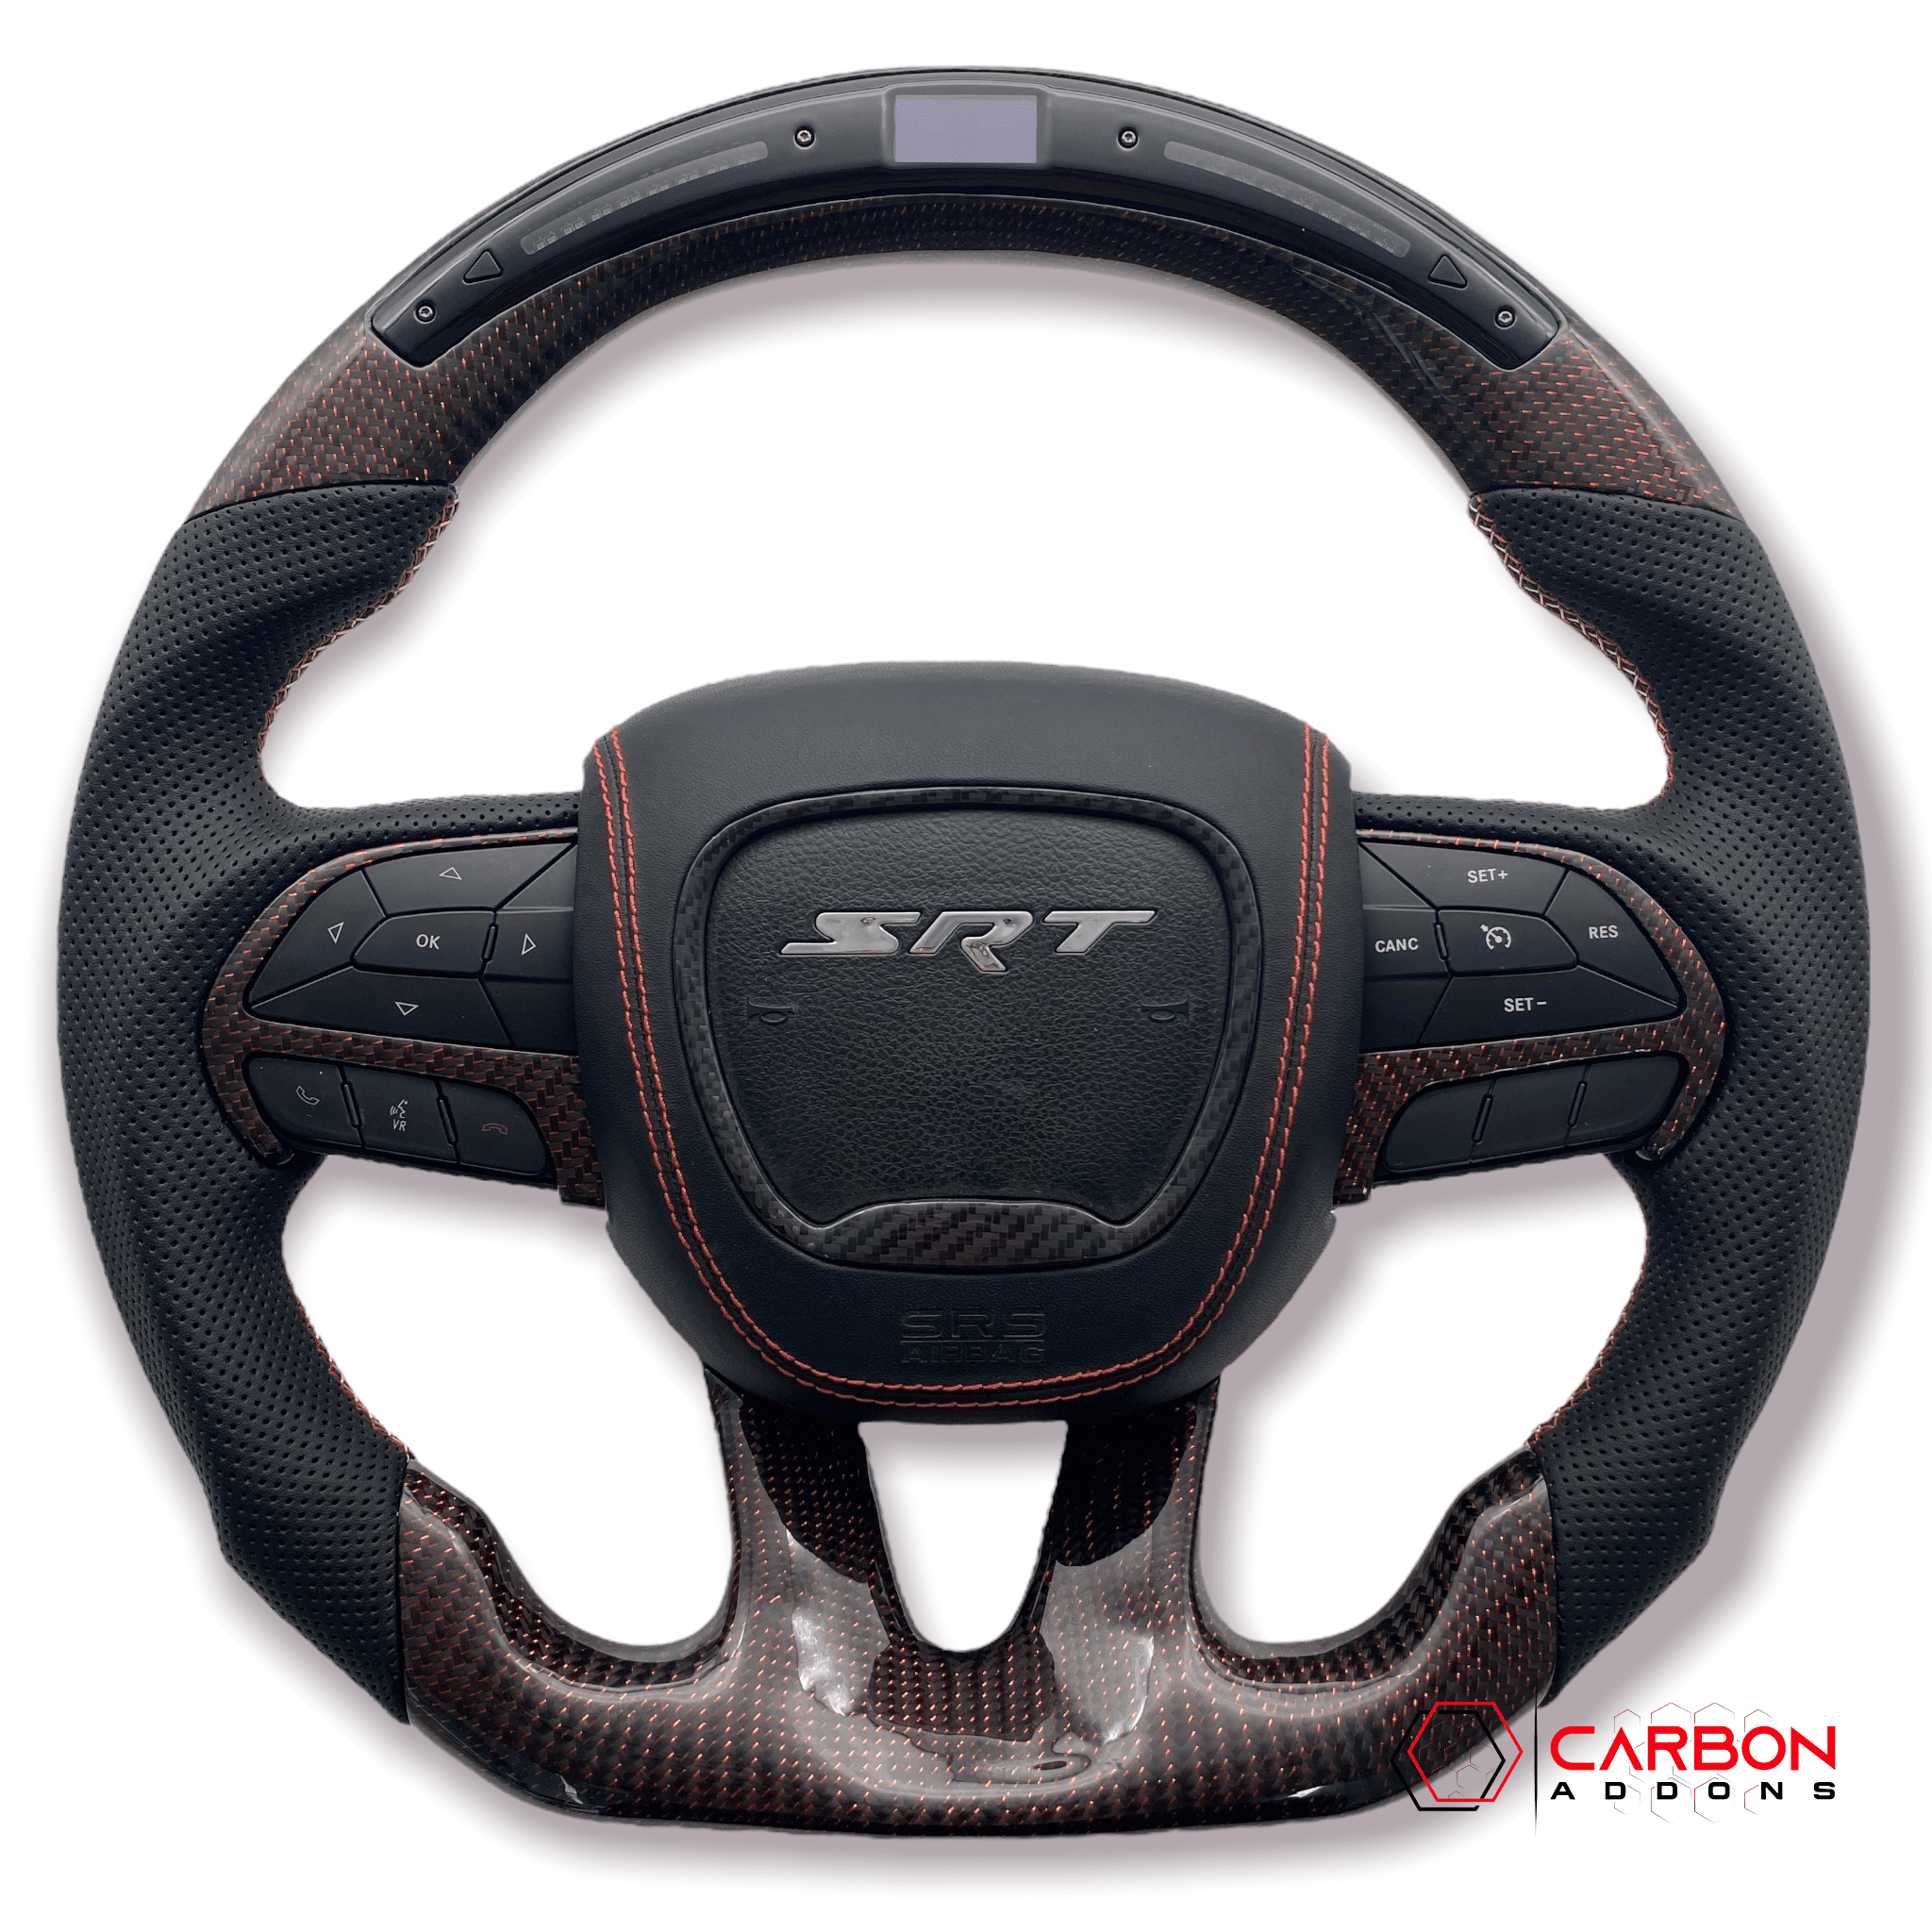 [Core Only] Custom Carbon Fiber Steering Wheel | 2015-2023 Dodge Charger Challenger Durango - carbonaddons Carbon Fiber Parts, Accessories, Upgrades, Mods